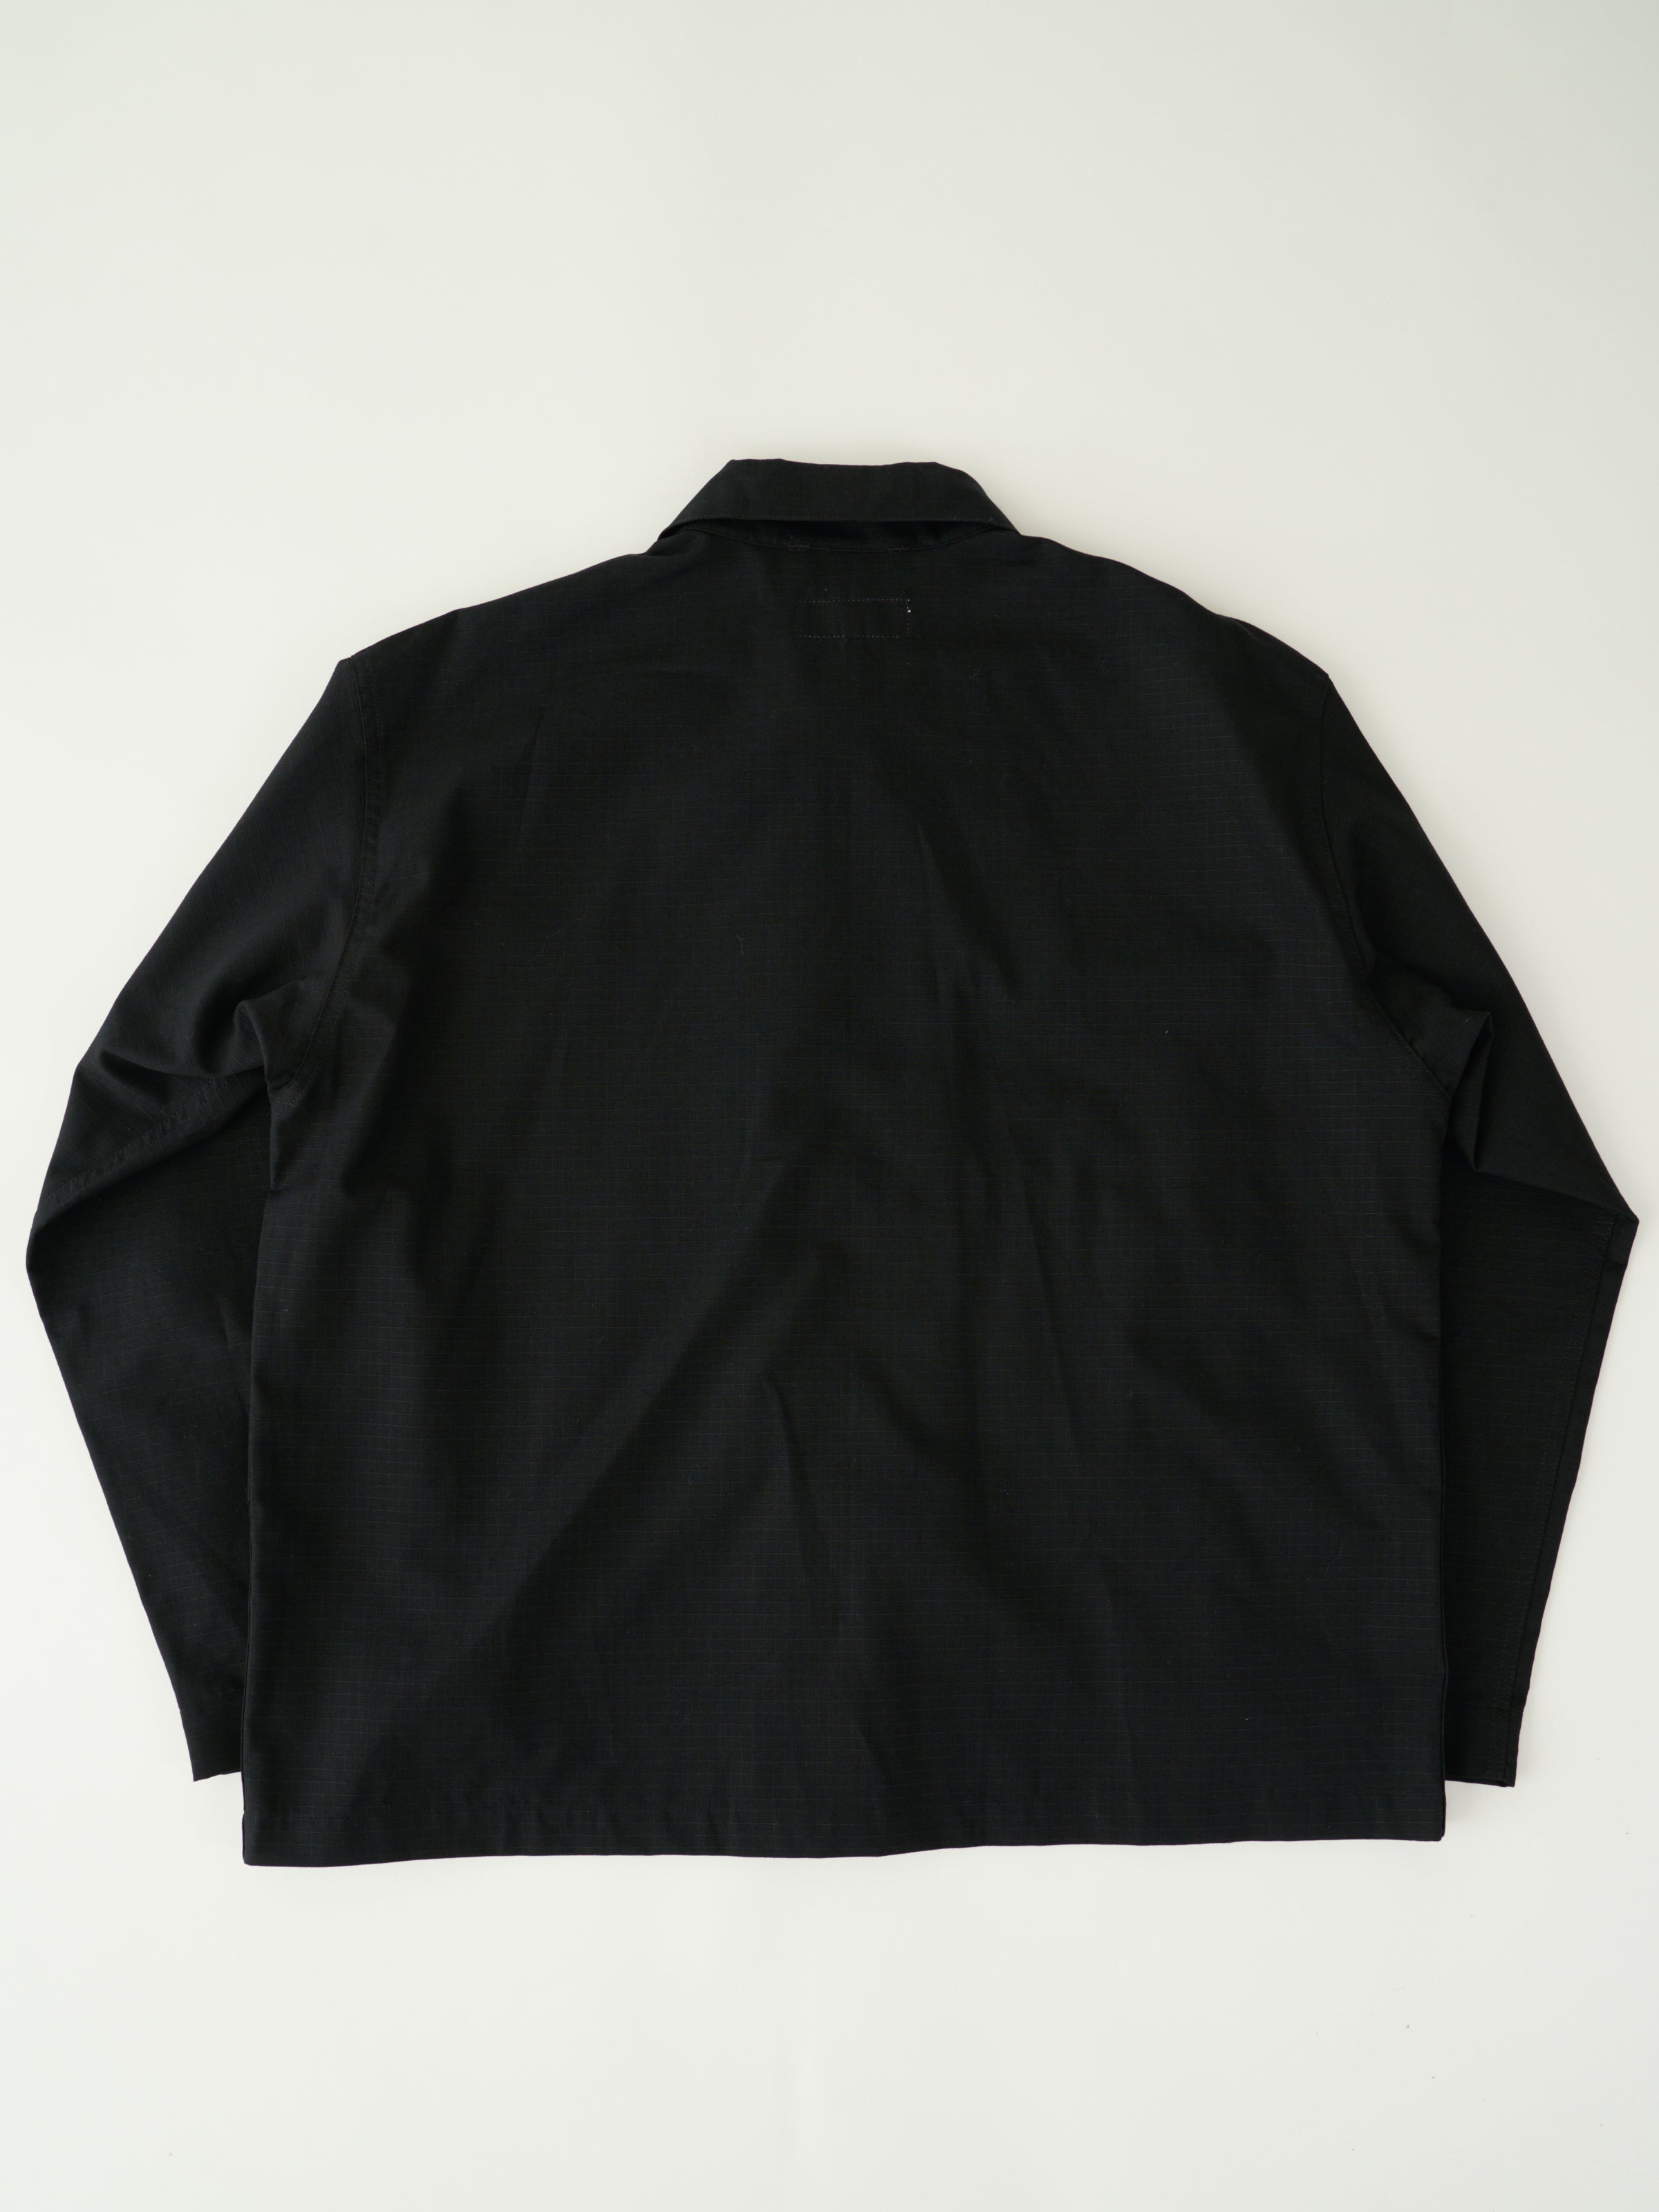 P44 Jacket - Black Cotton Ripstop